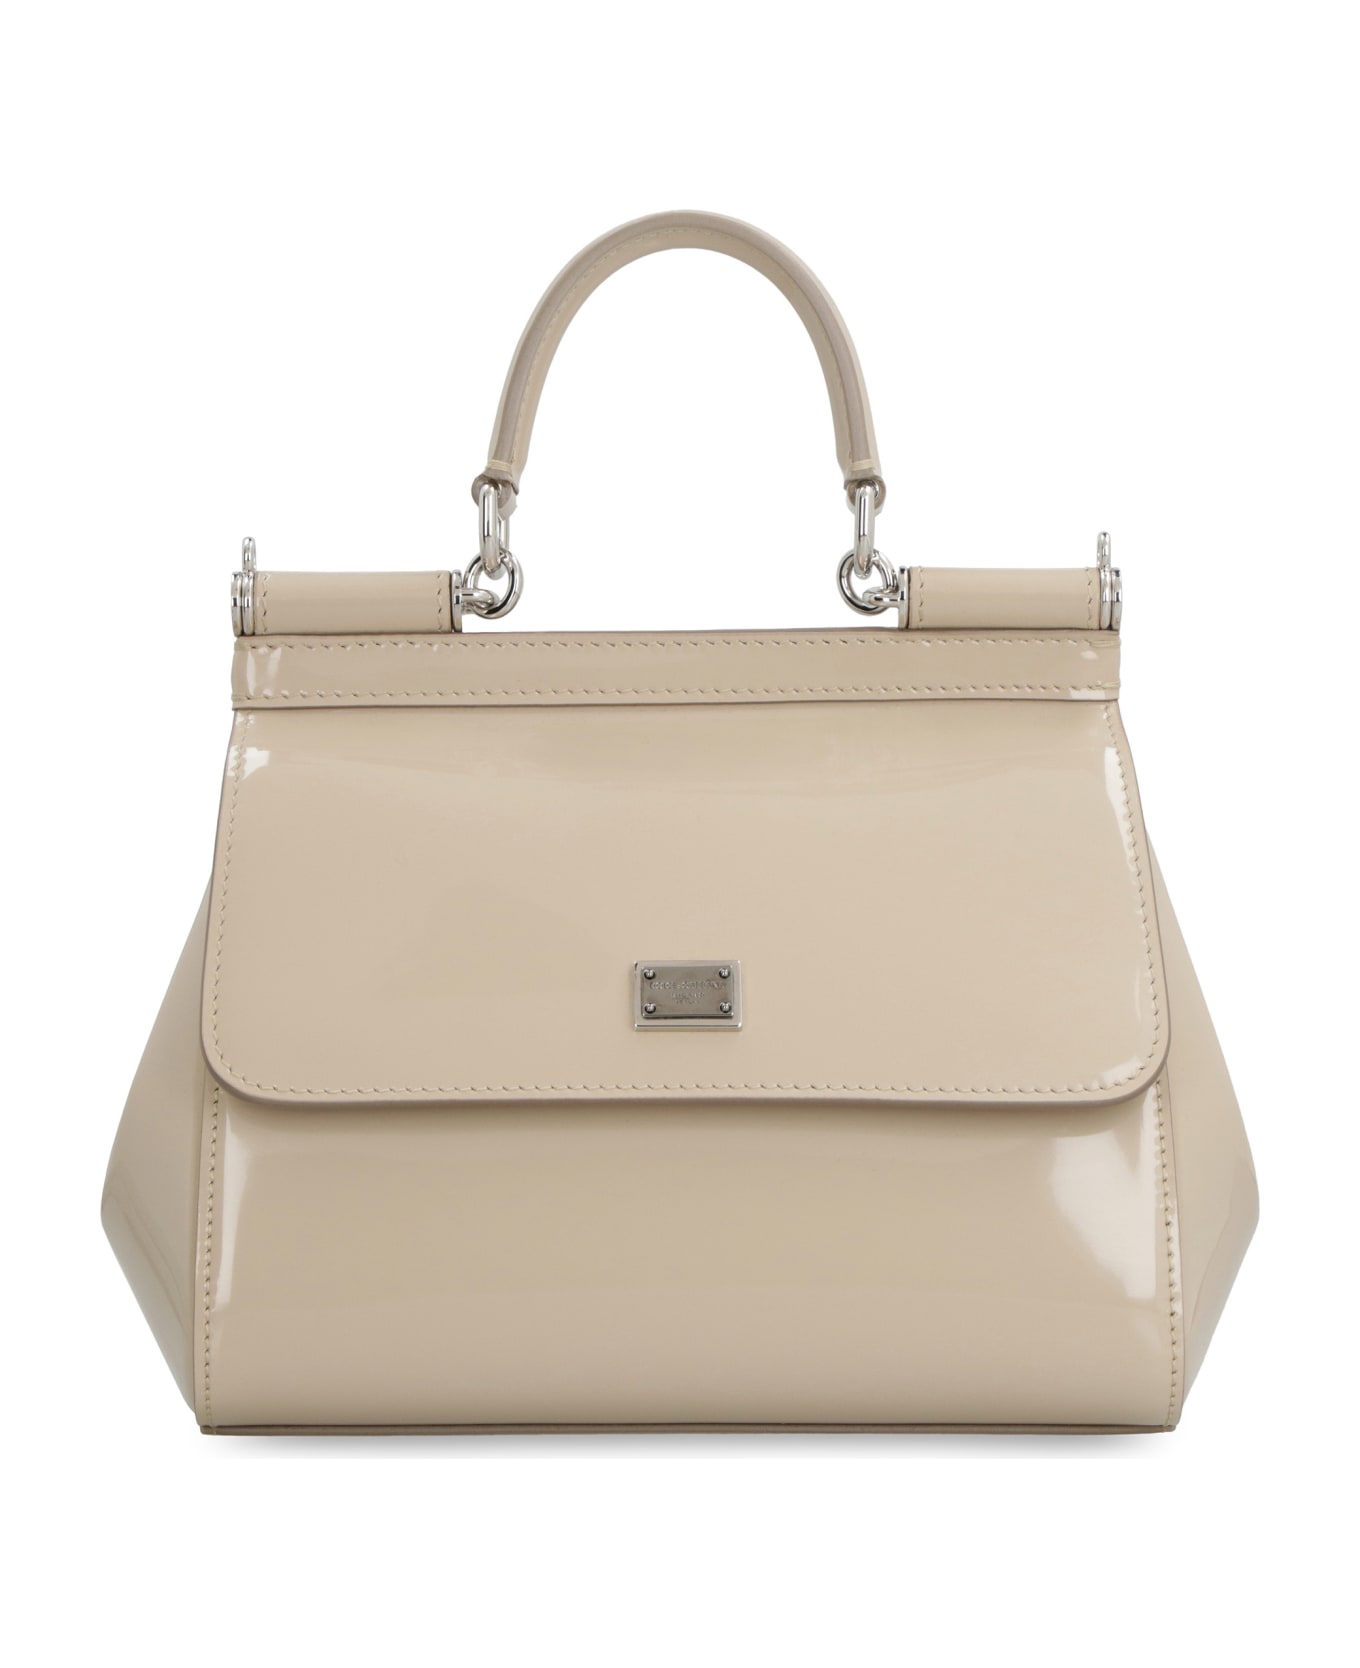 Dolce & Gabbana Sicily Leather Mini Handbag - Beige